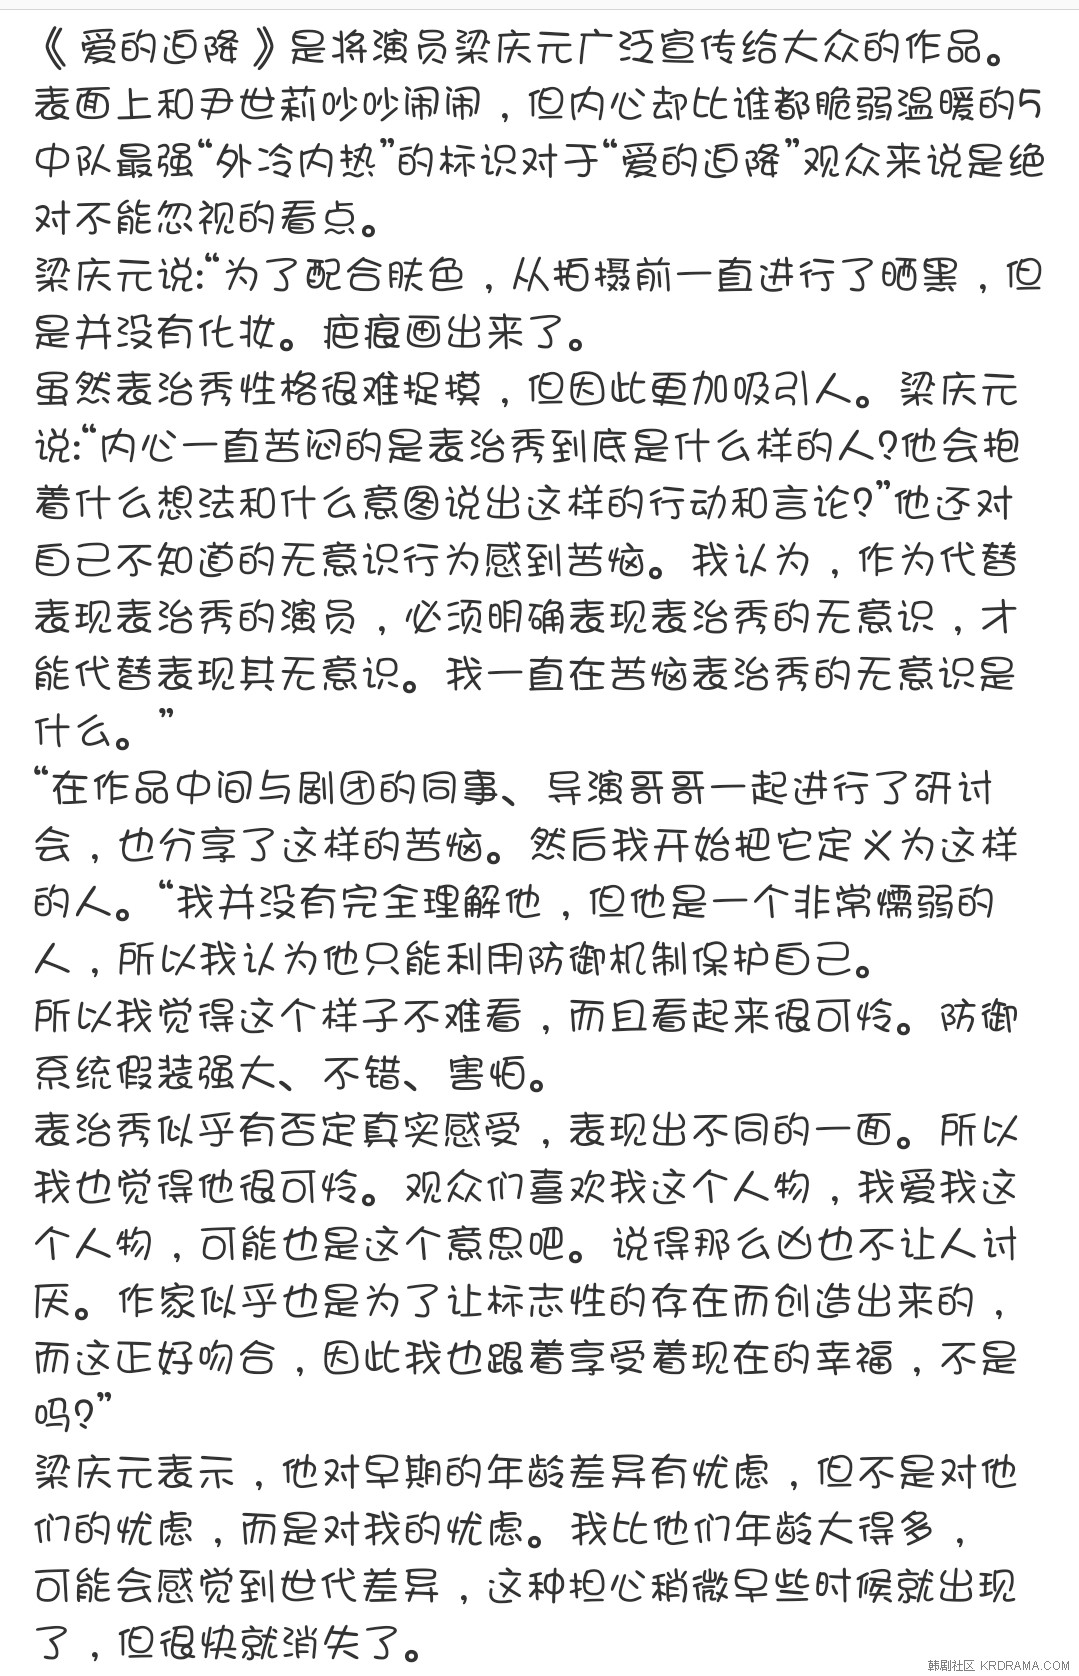 Screenshot_20200222-143512_Weibo.jpg